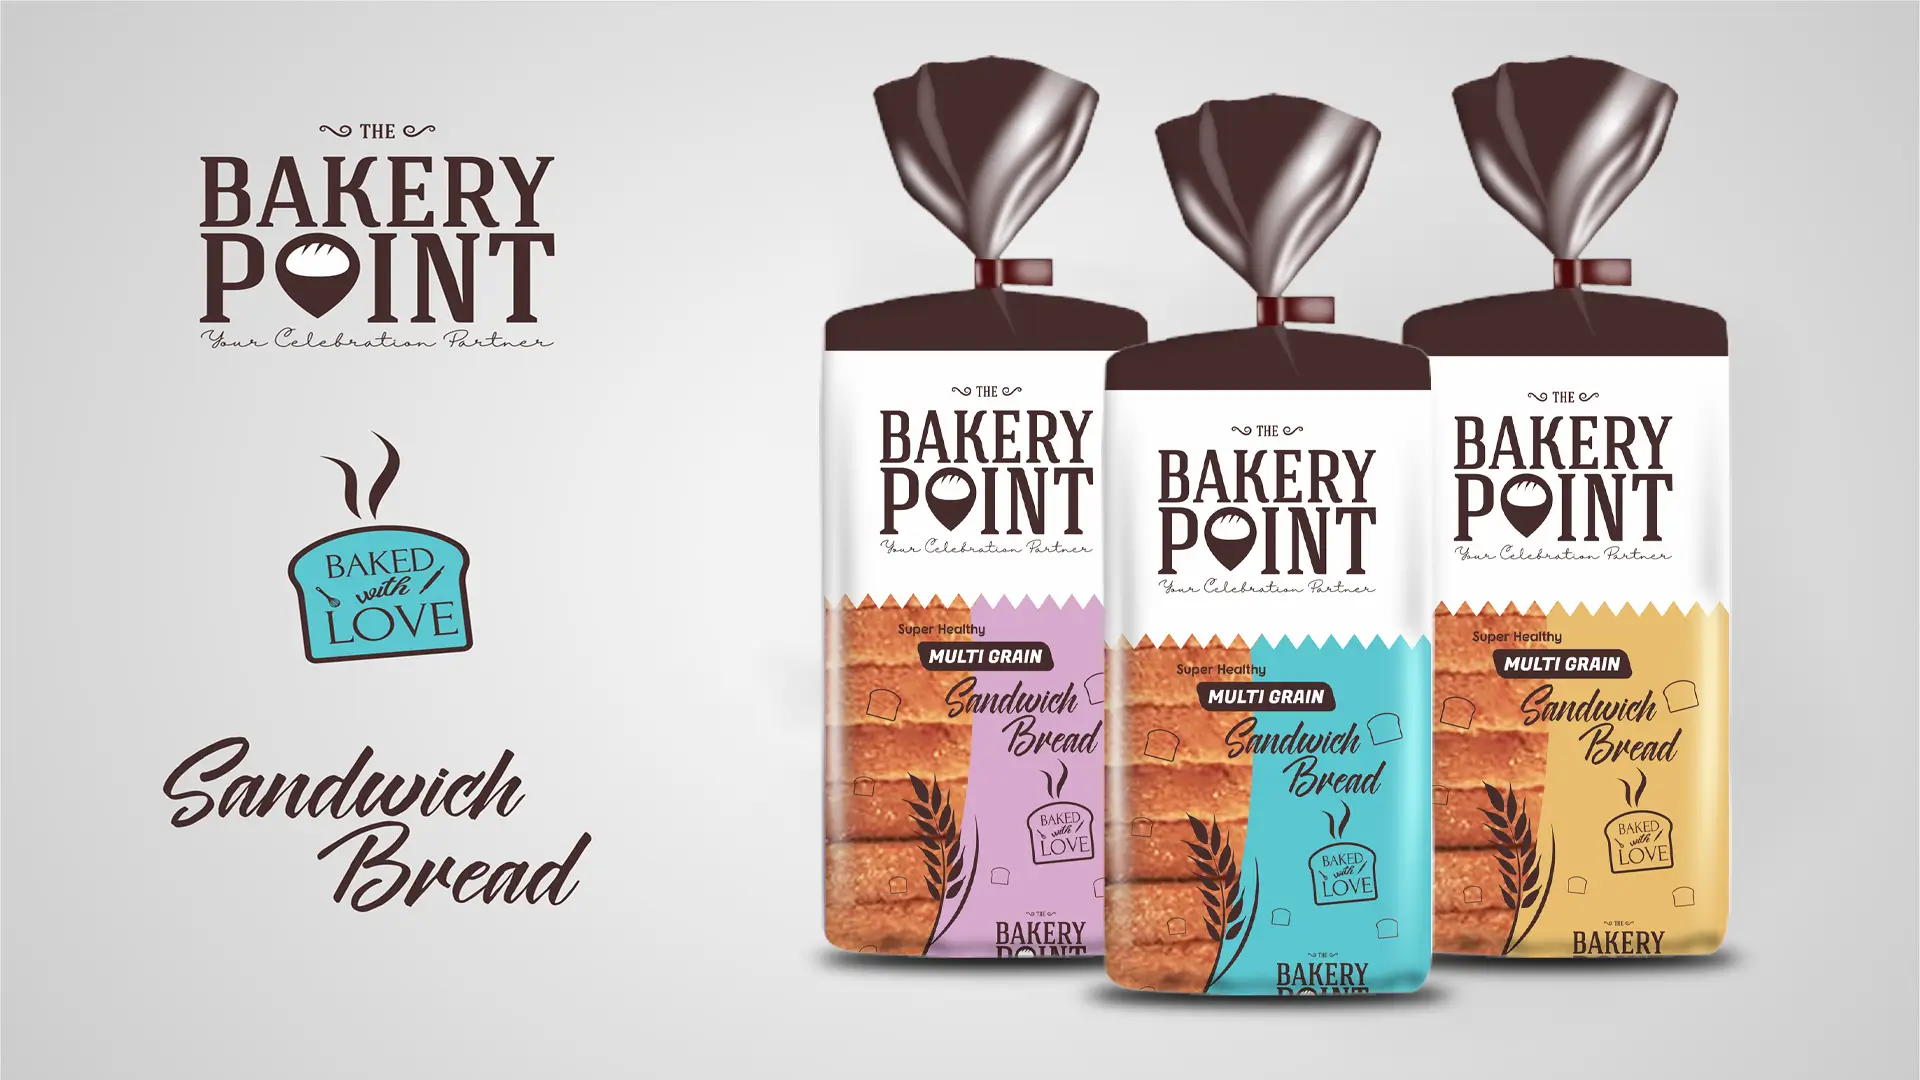  bread packaging design agency 